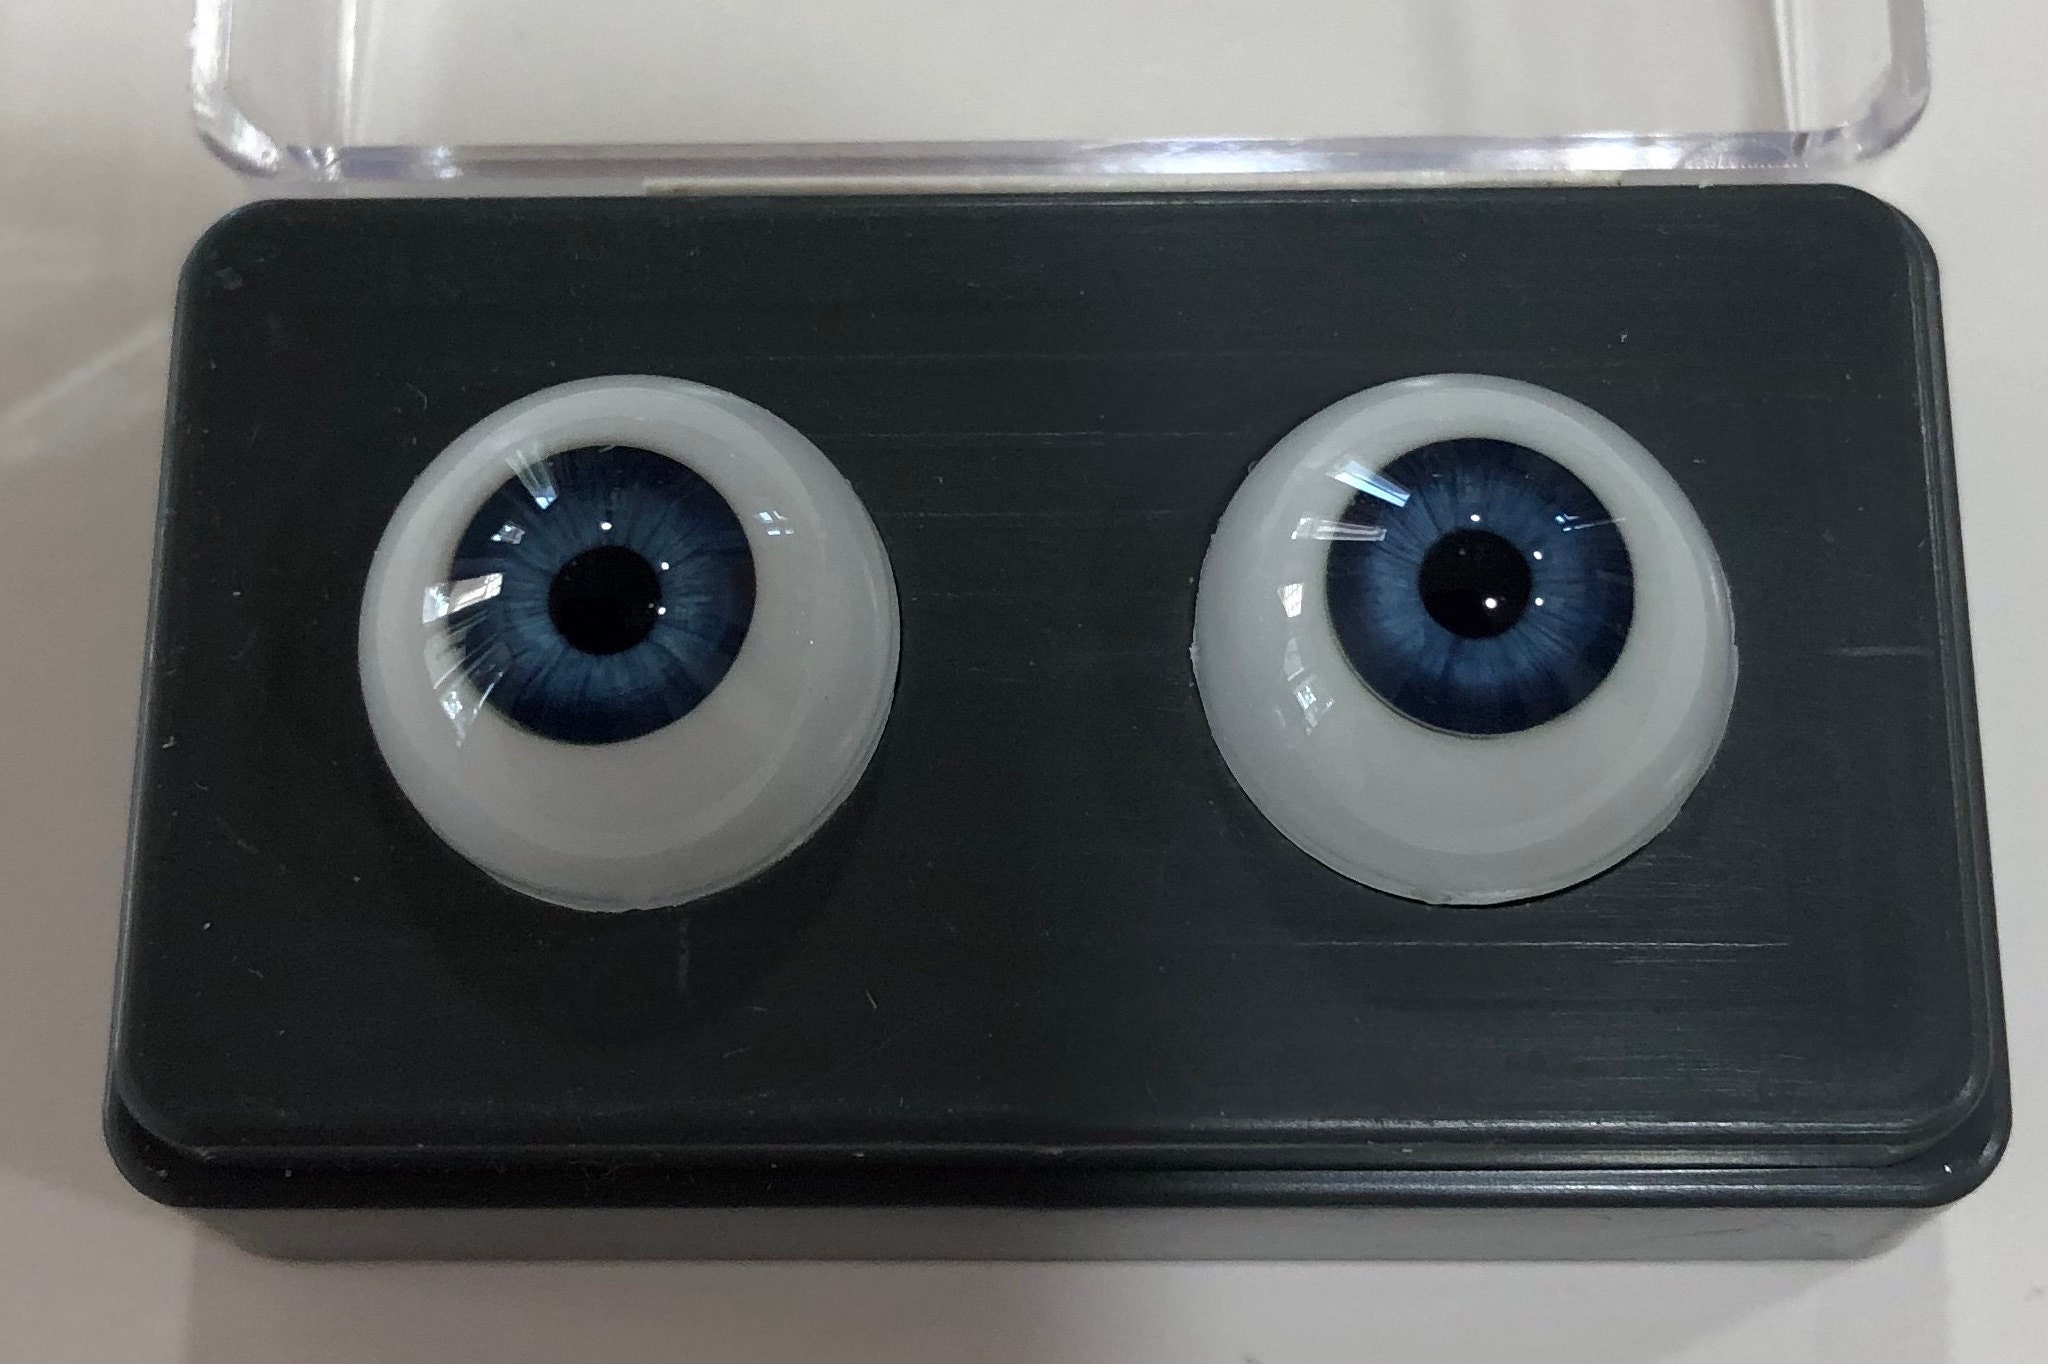 8mm Blue glass eyes, concave/convex - per pair